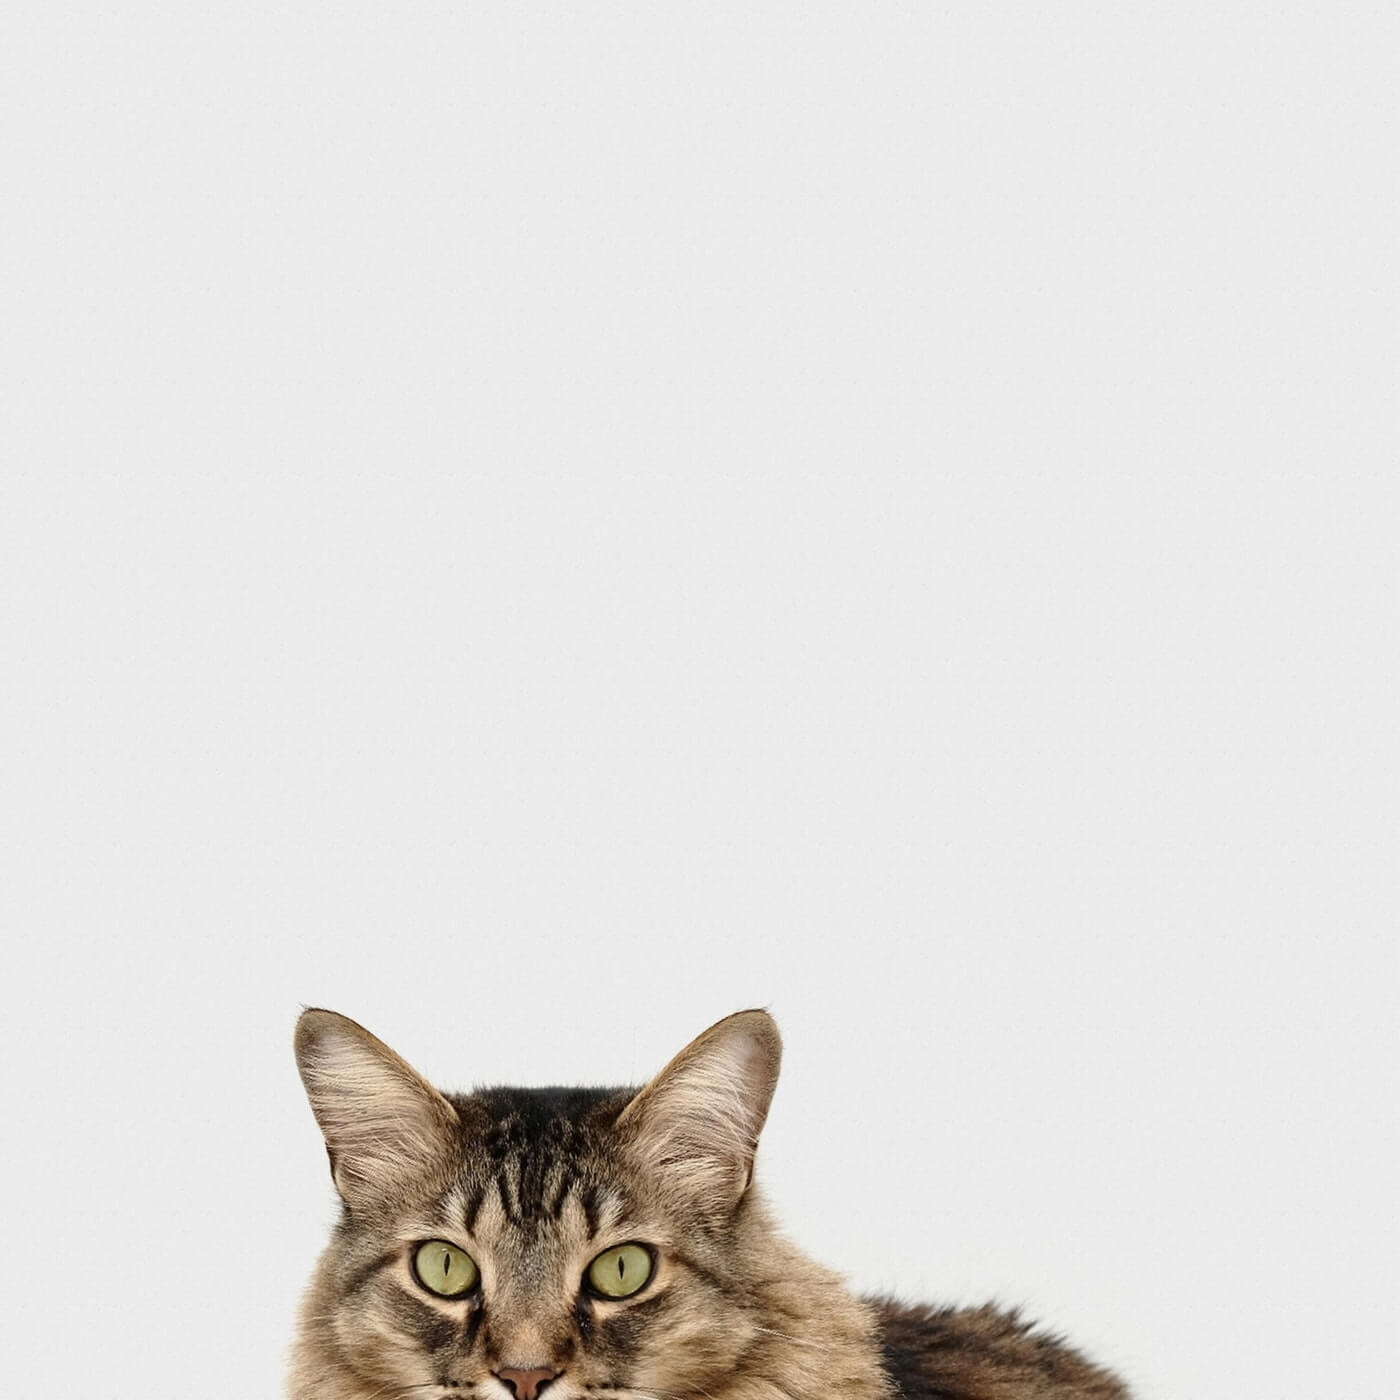 Cat quote background